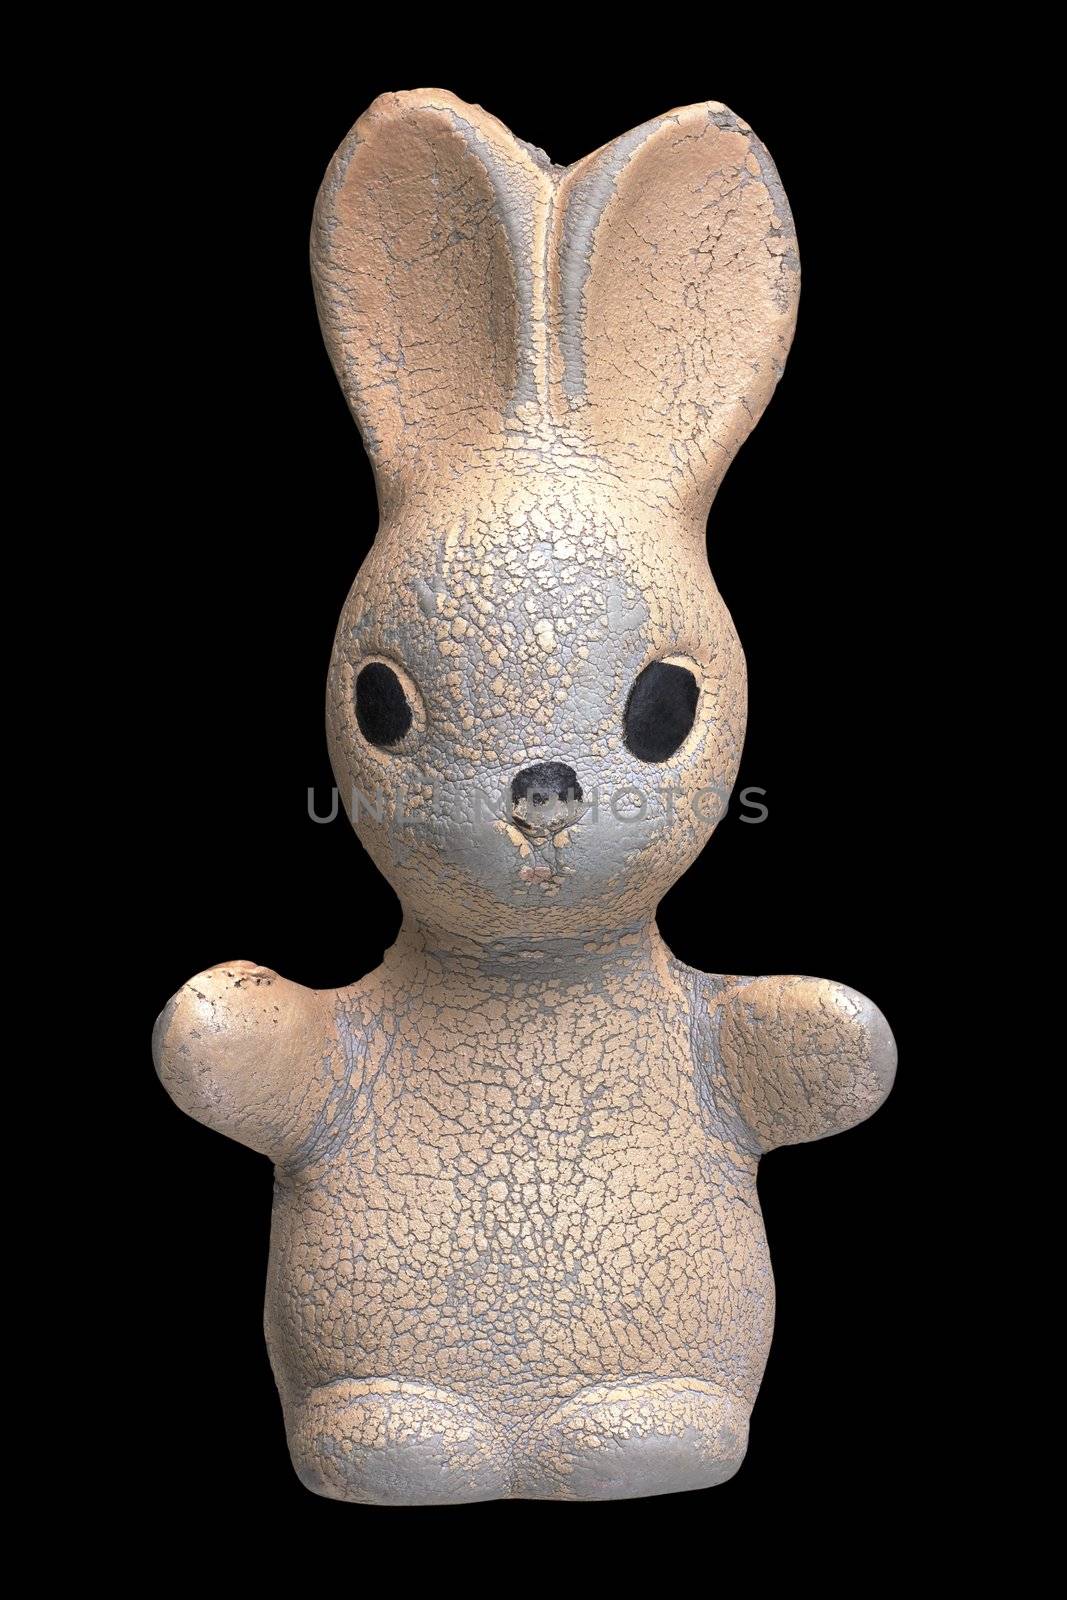 Toy rabbit by andrius